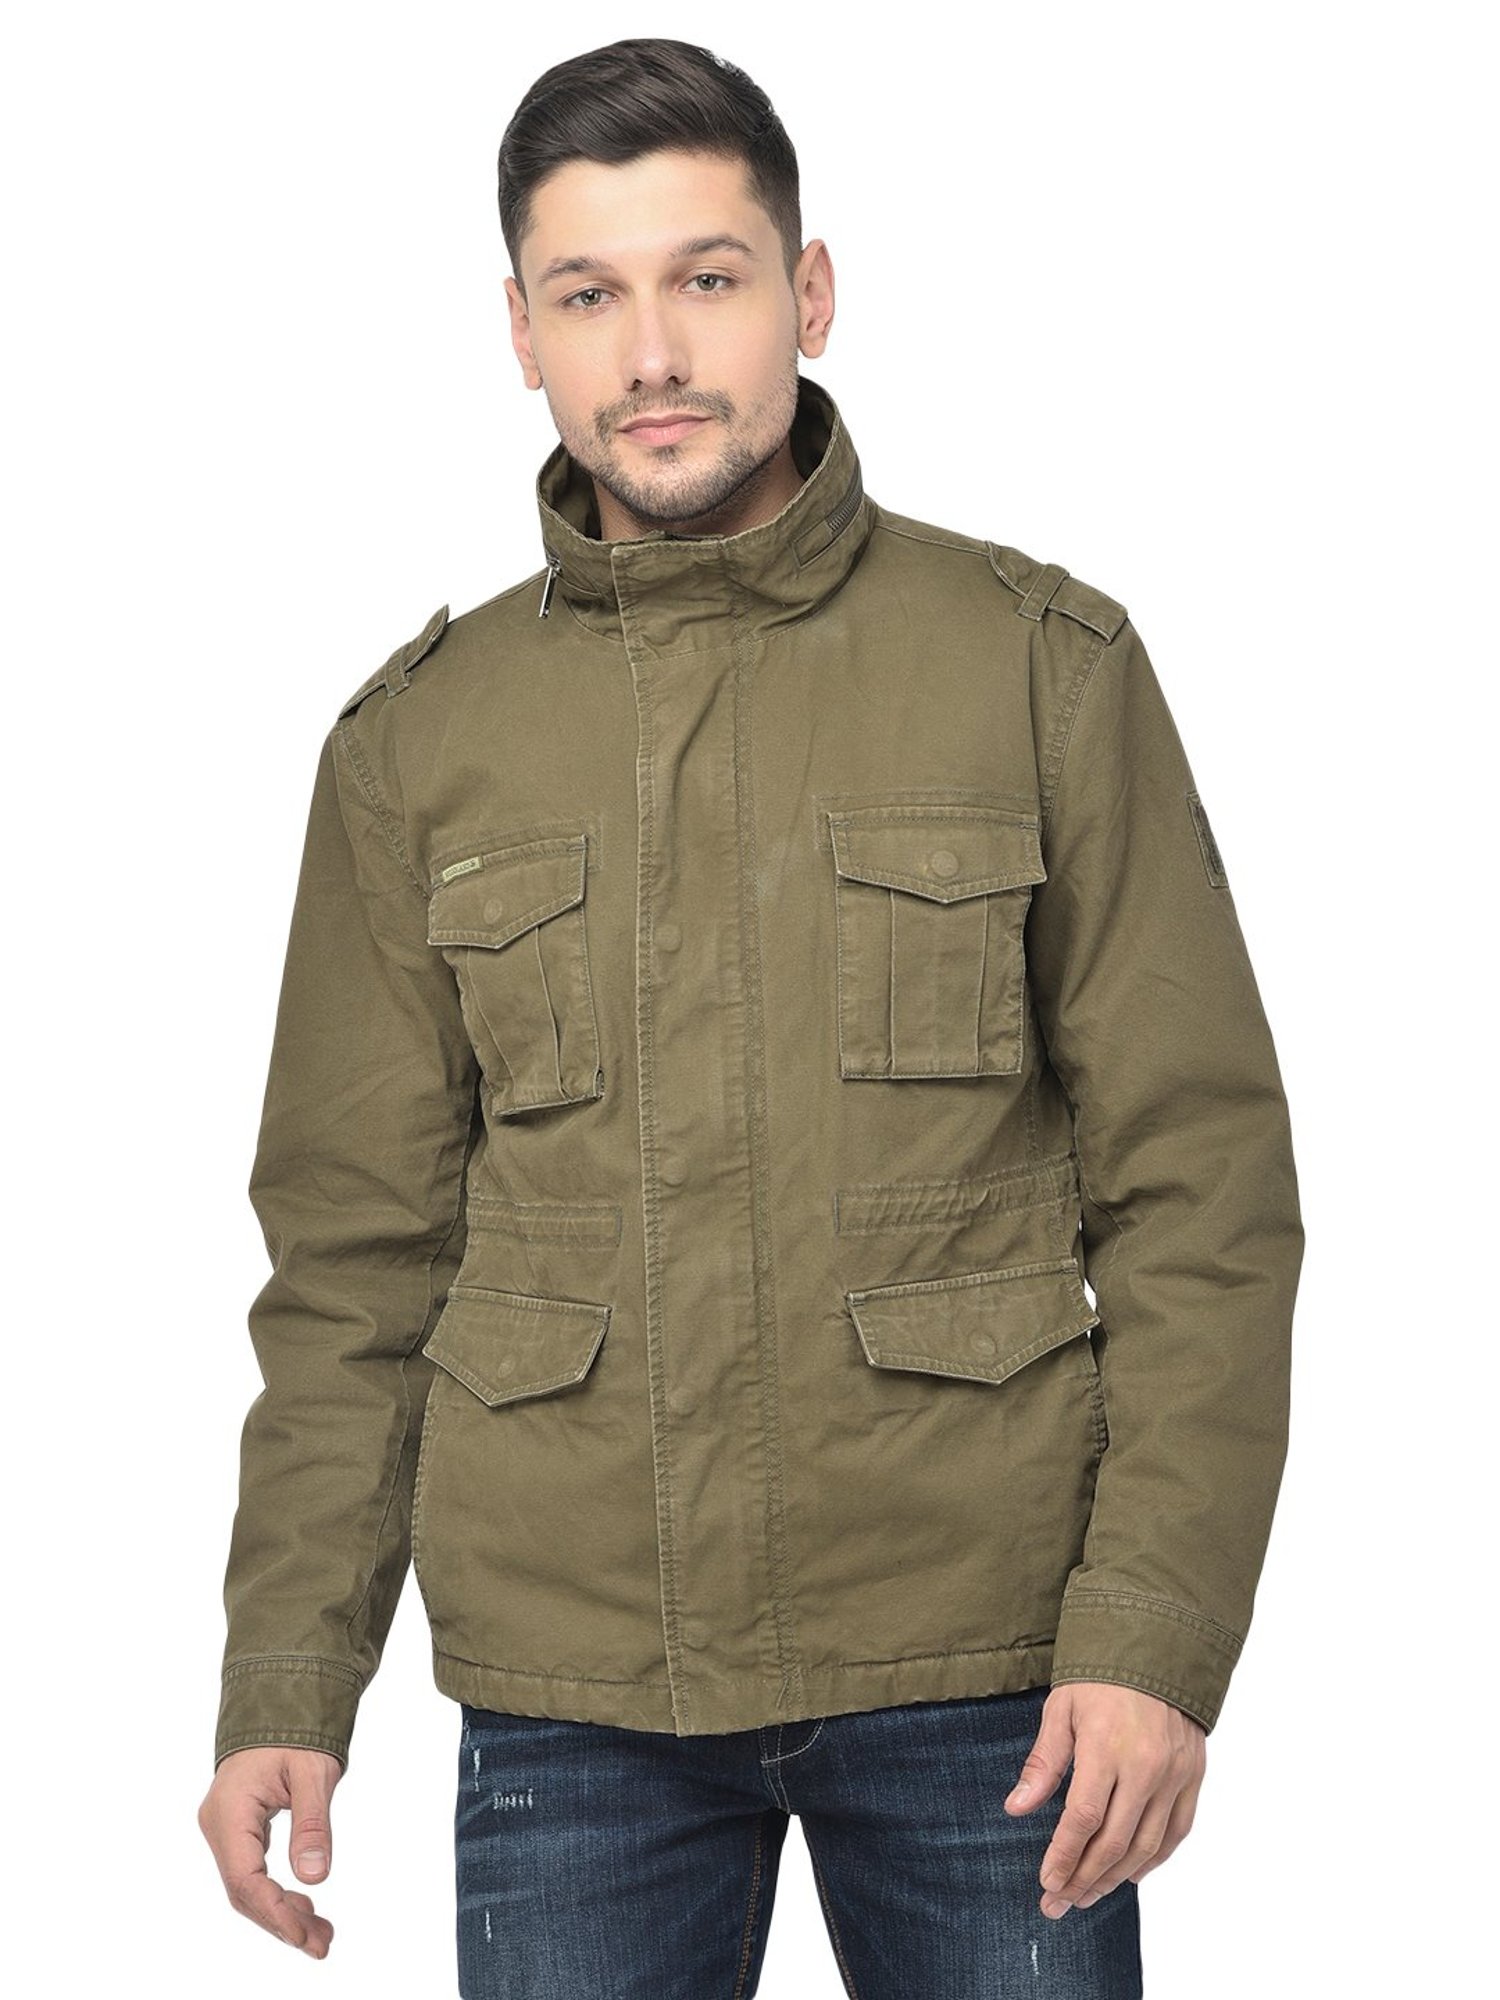 DEWBU® Men's Heated Jacket Detachable Hood With 12V Battery Pack - Olive  Green